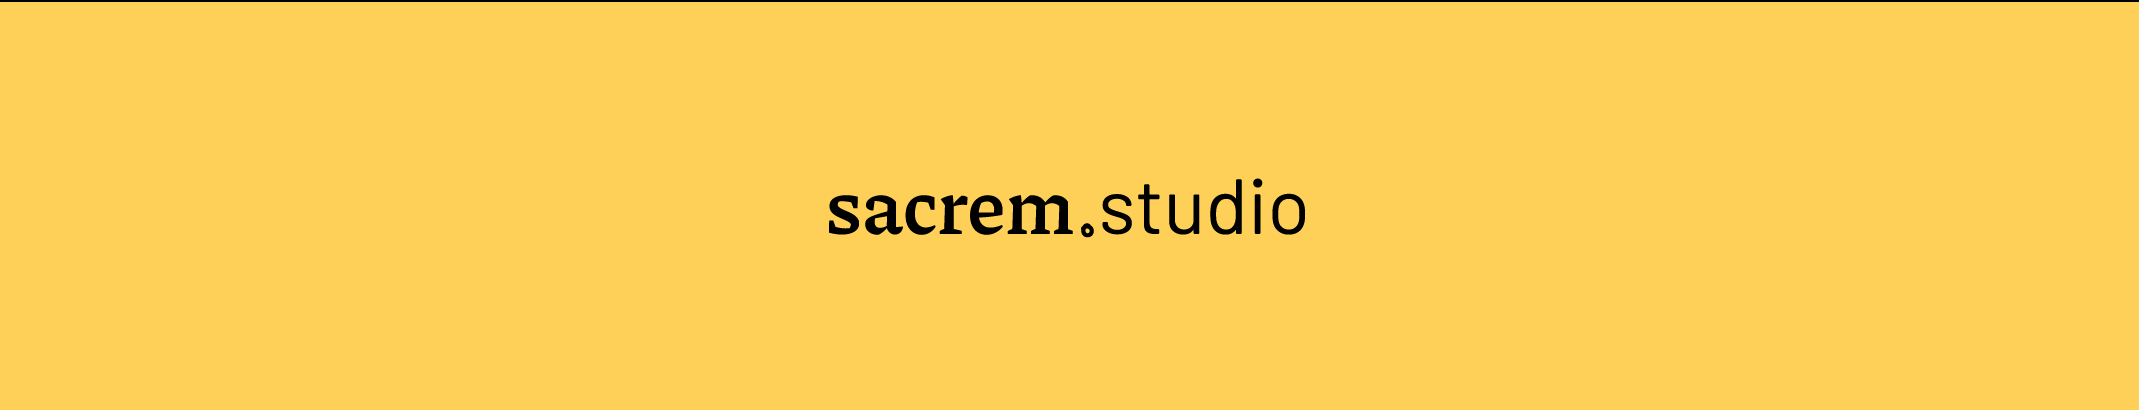 sacrem studio's profile banner